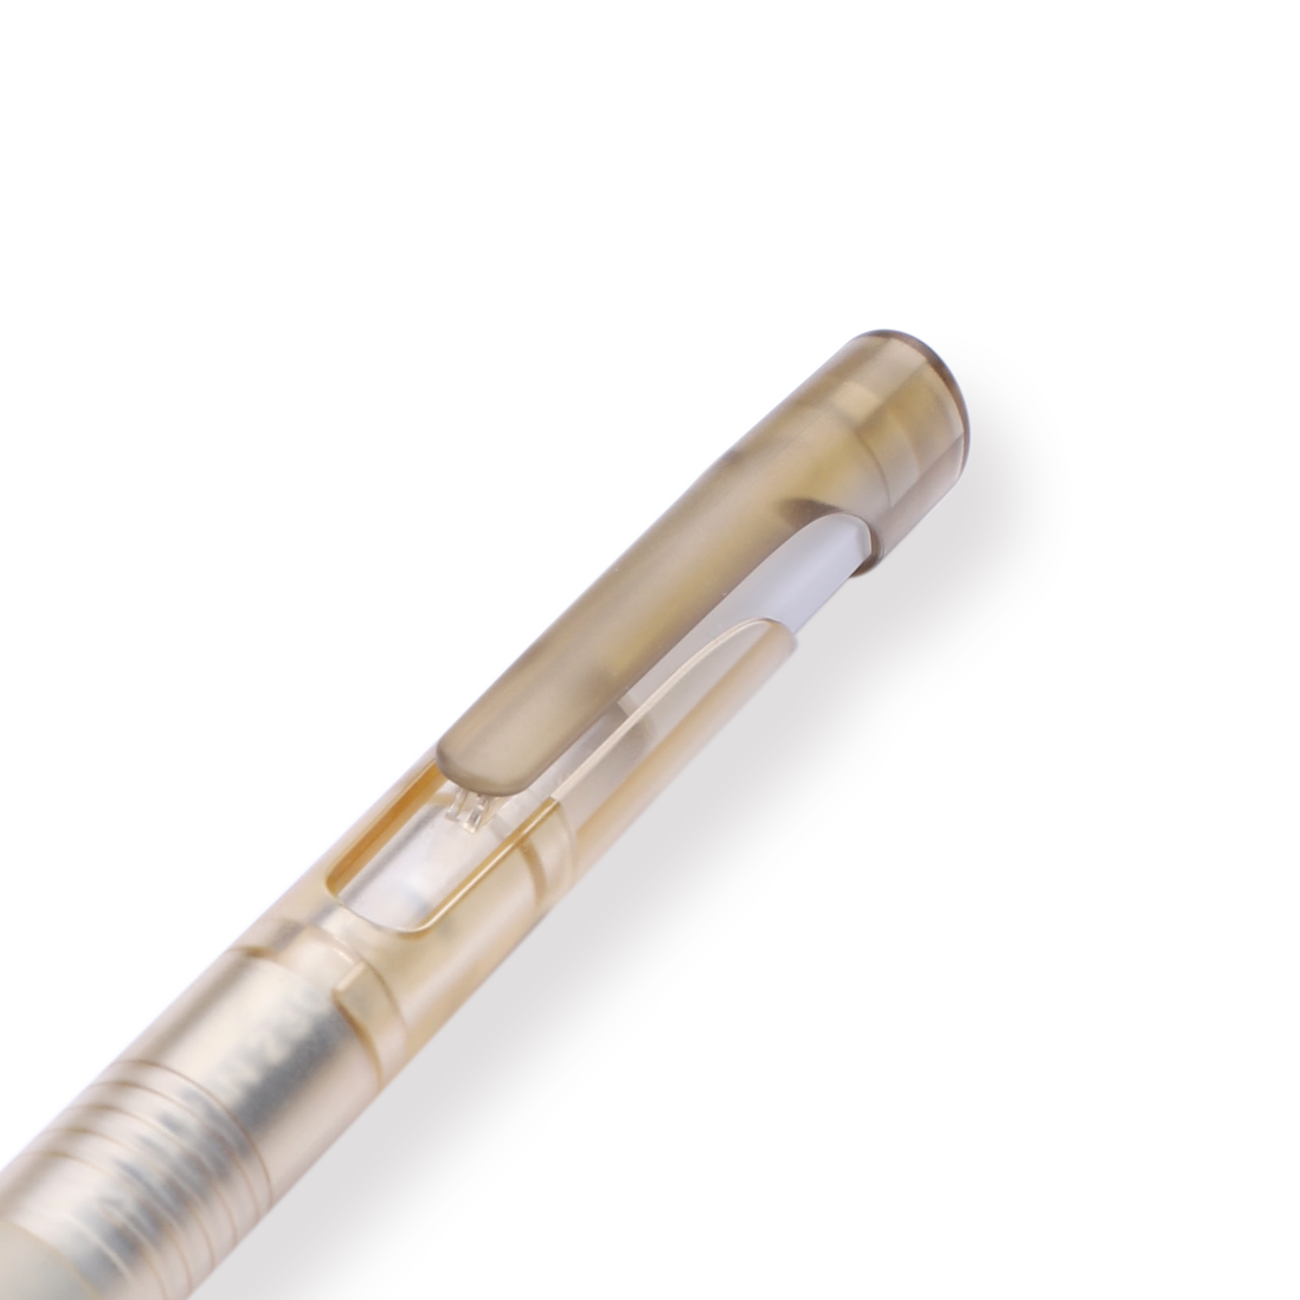 Zebra Blen Limited Edition Retractable Gel Pen - The Clear Nuance Color - Ochre